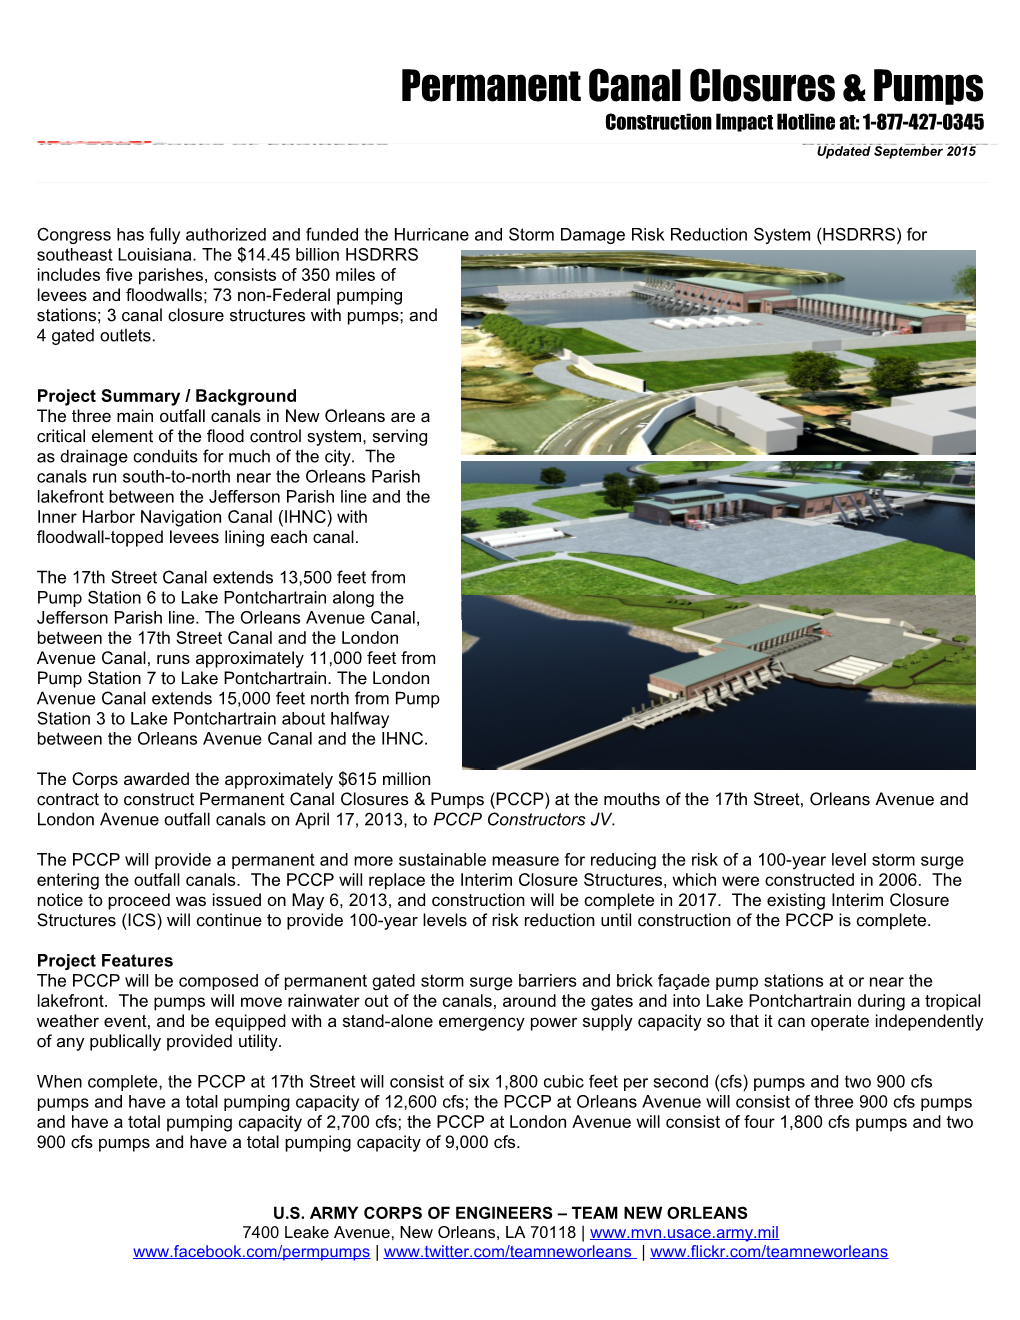 Permanent Canal Closures & Pumps Construction Impact Hotline At: 1-877-427-0345